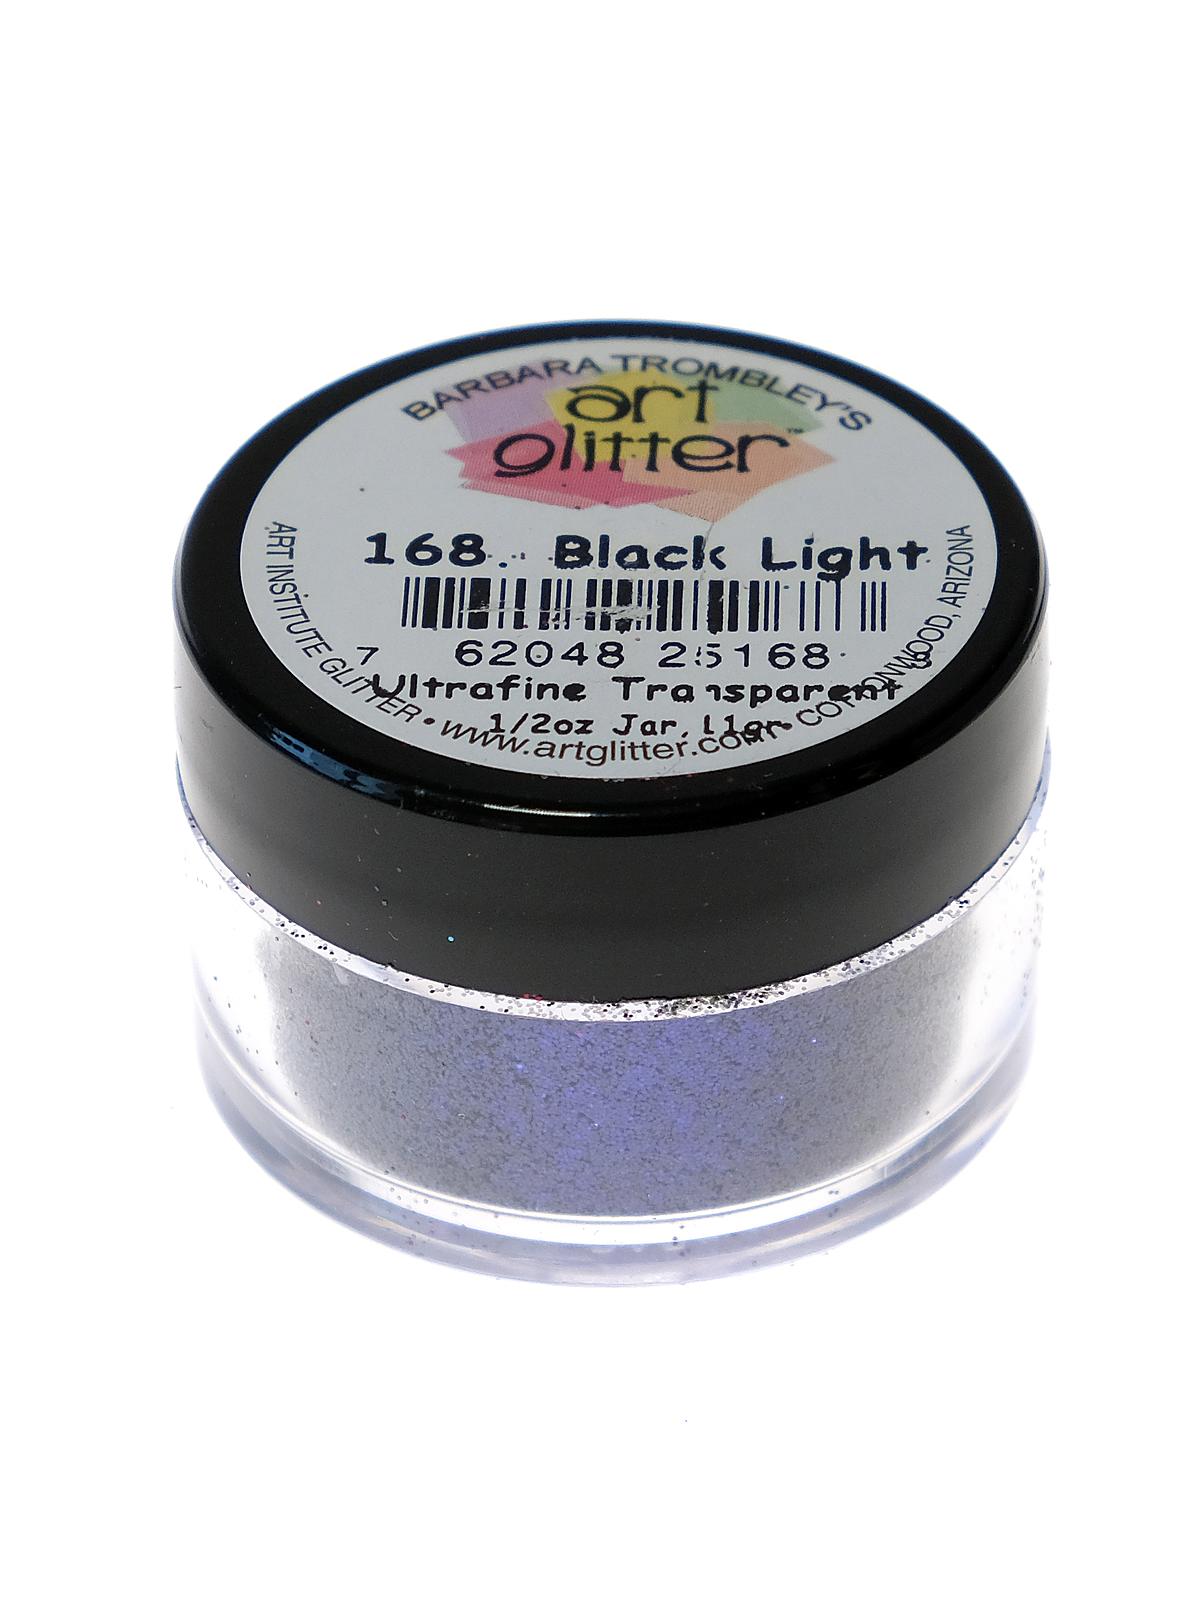 Ultrafine Transparent Glitter Black Light 1 2 Oz. Jar